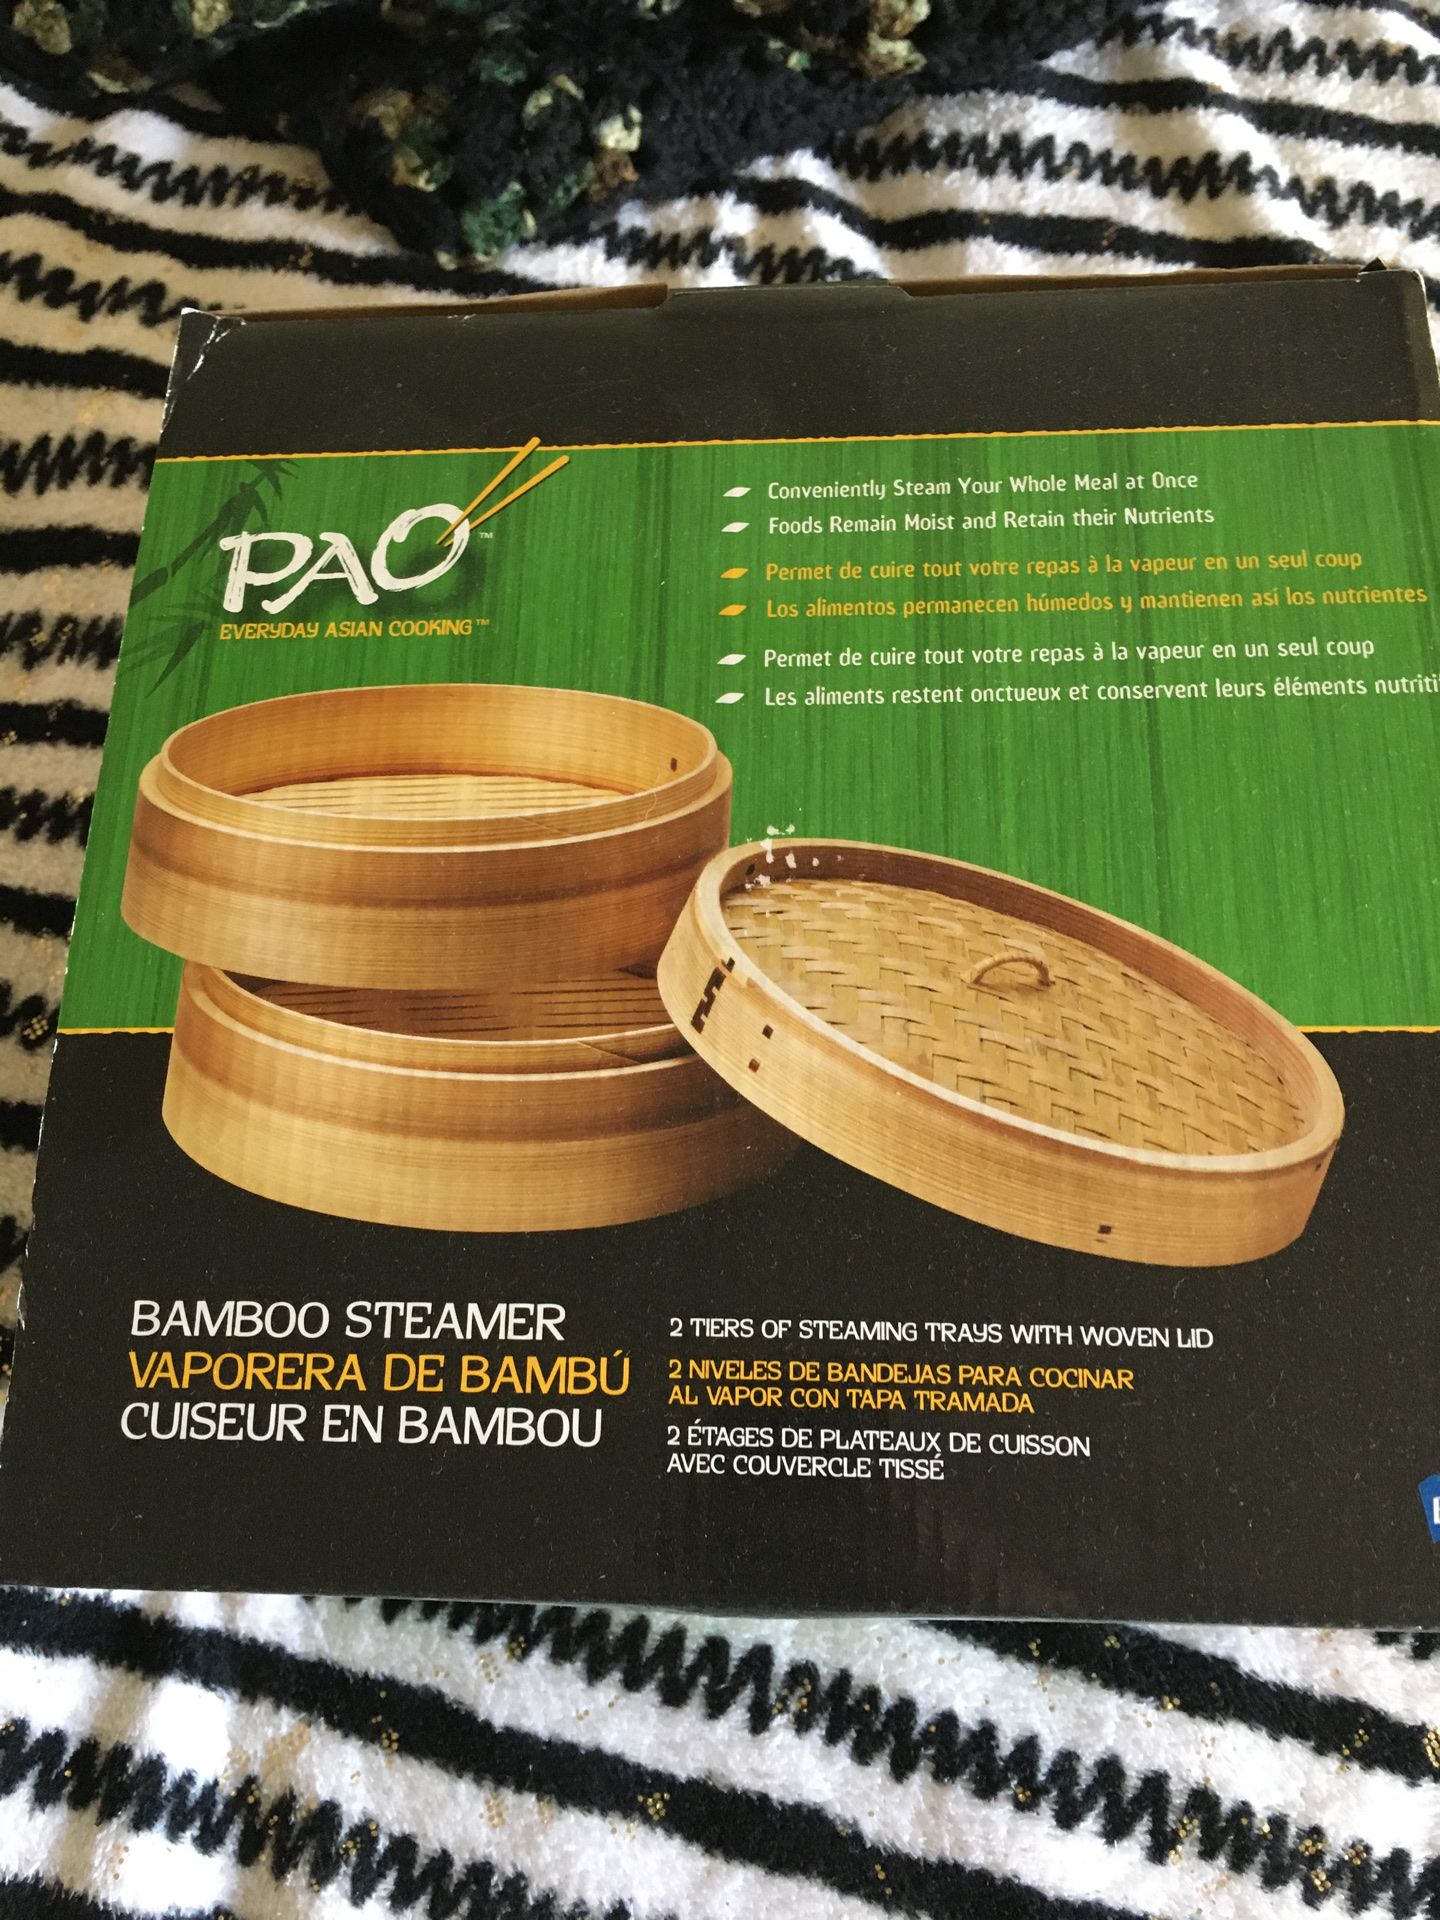 Pao Bamboo Steamer